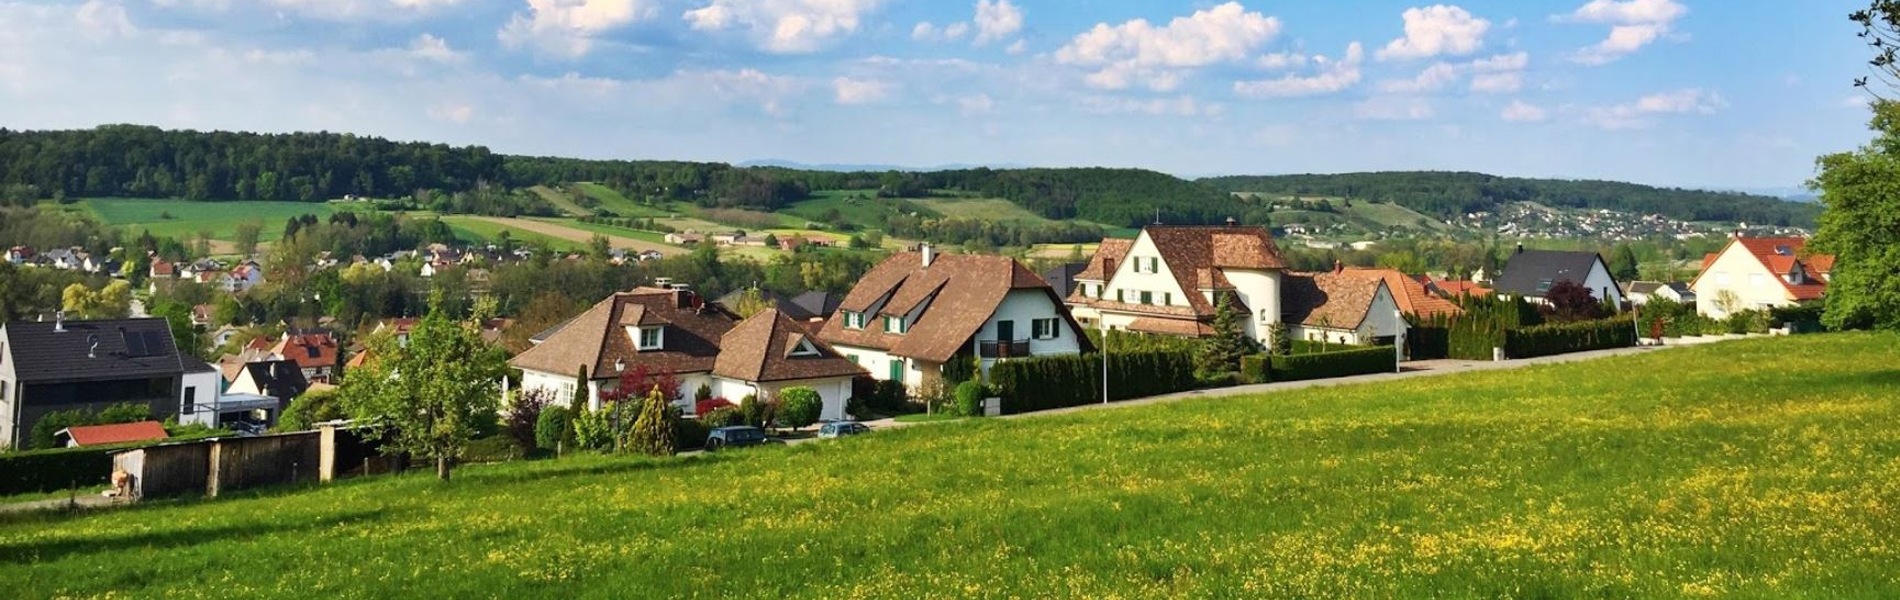 Village Alsace